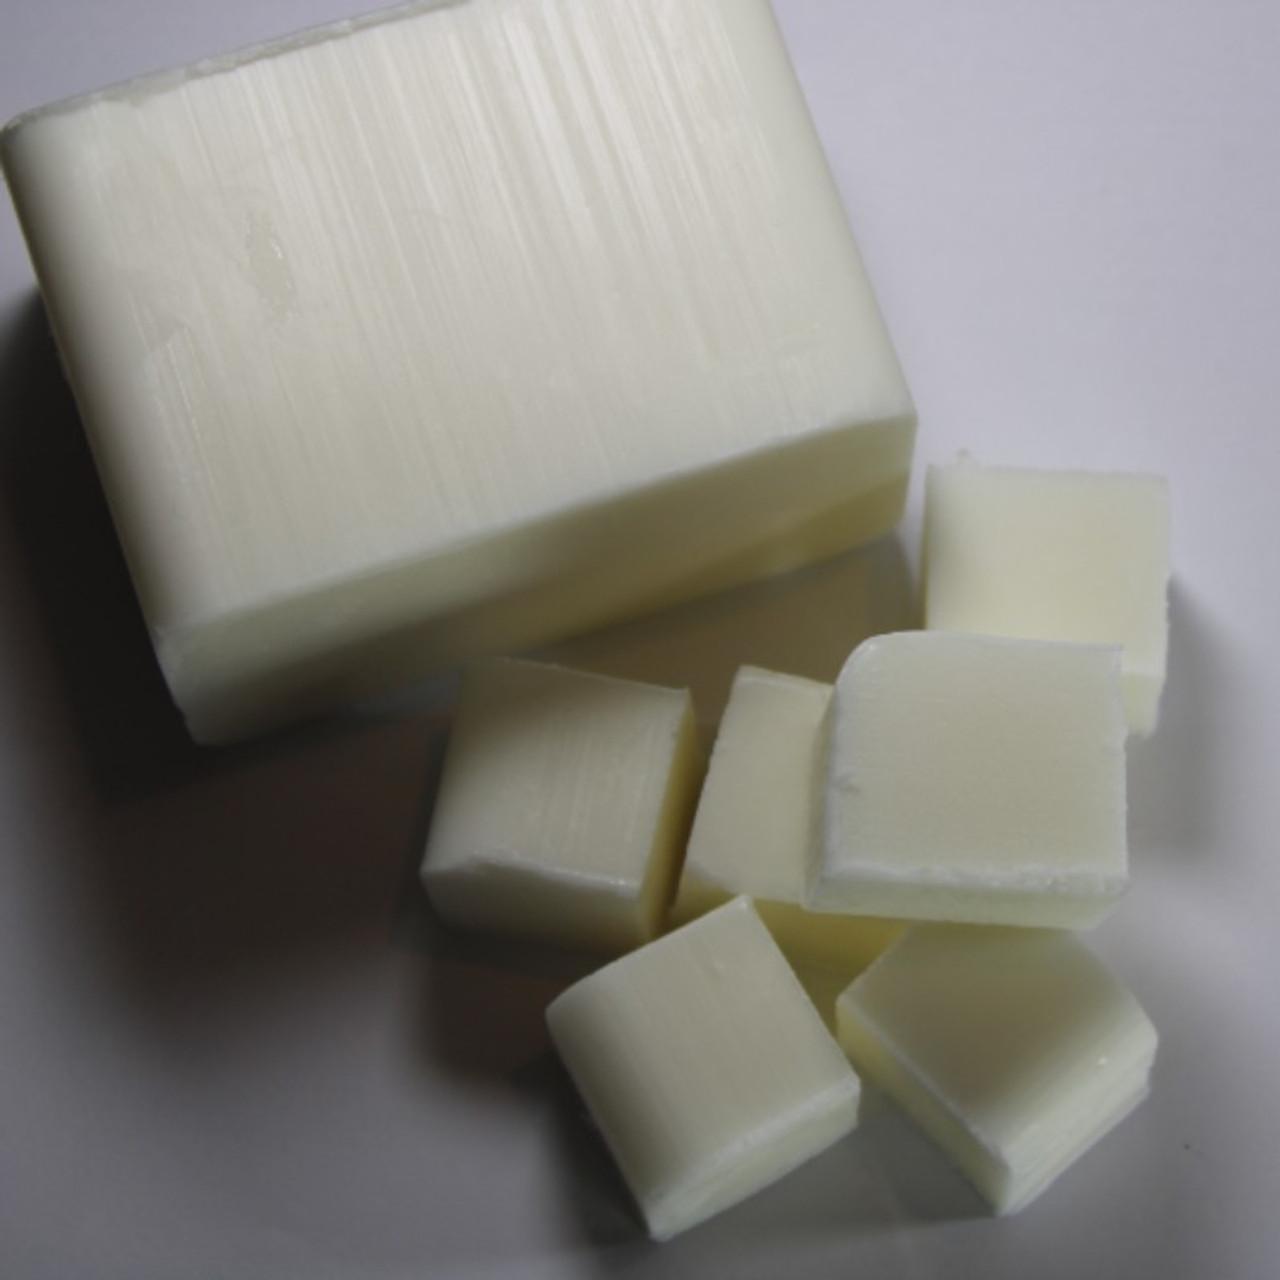 Shea Butter Soap Base (Melt and Pour)